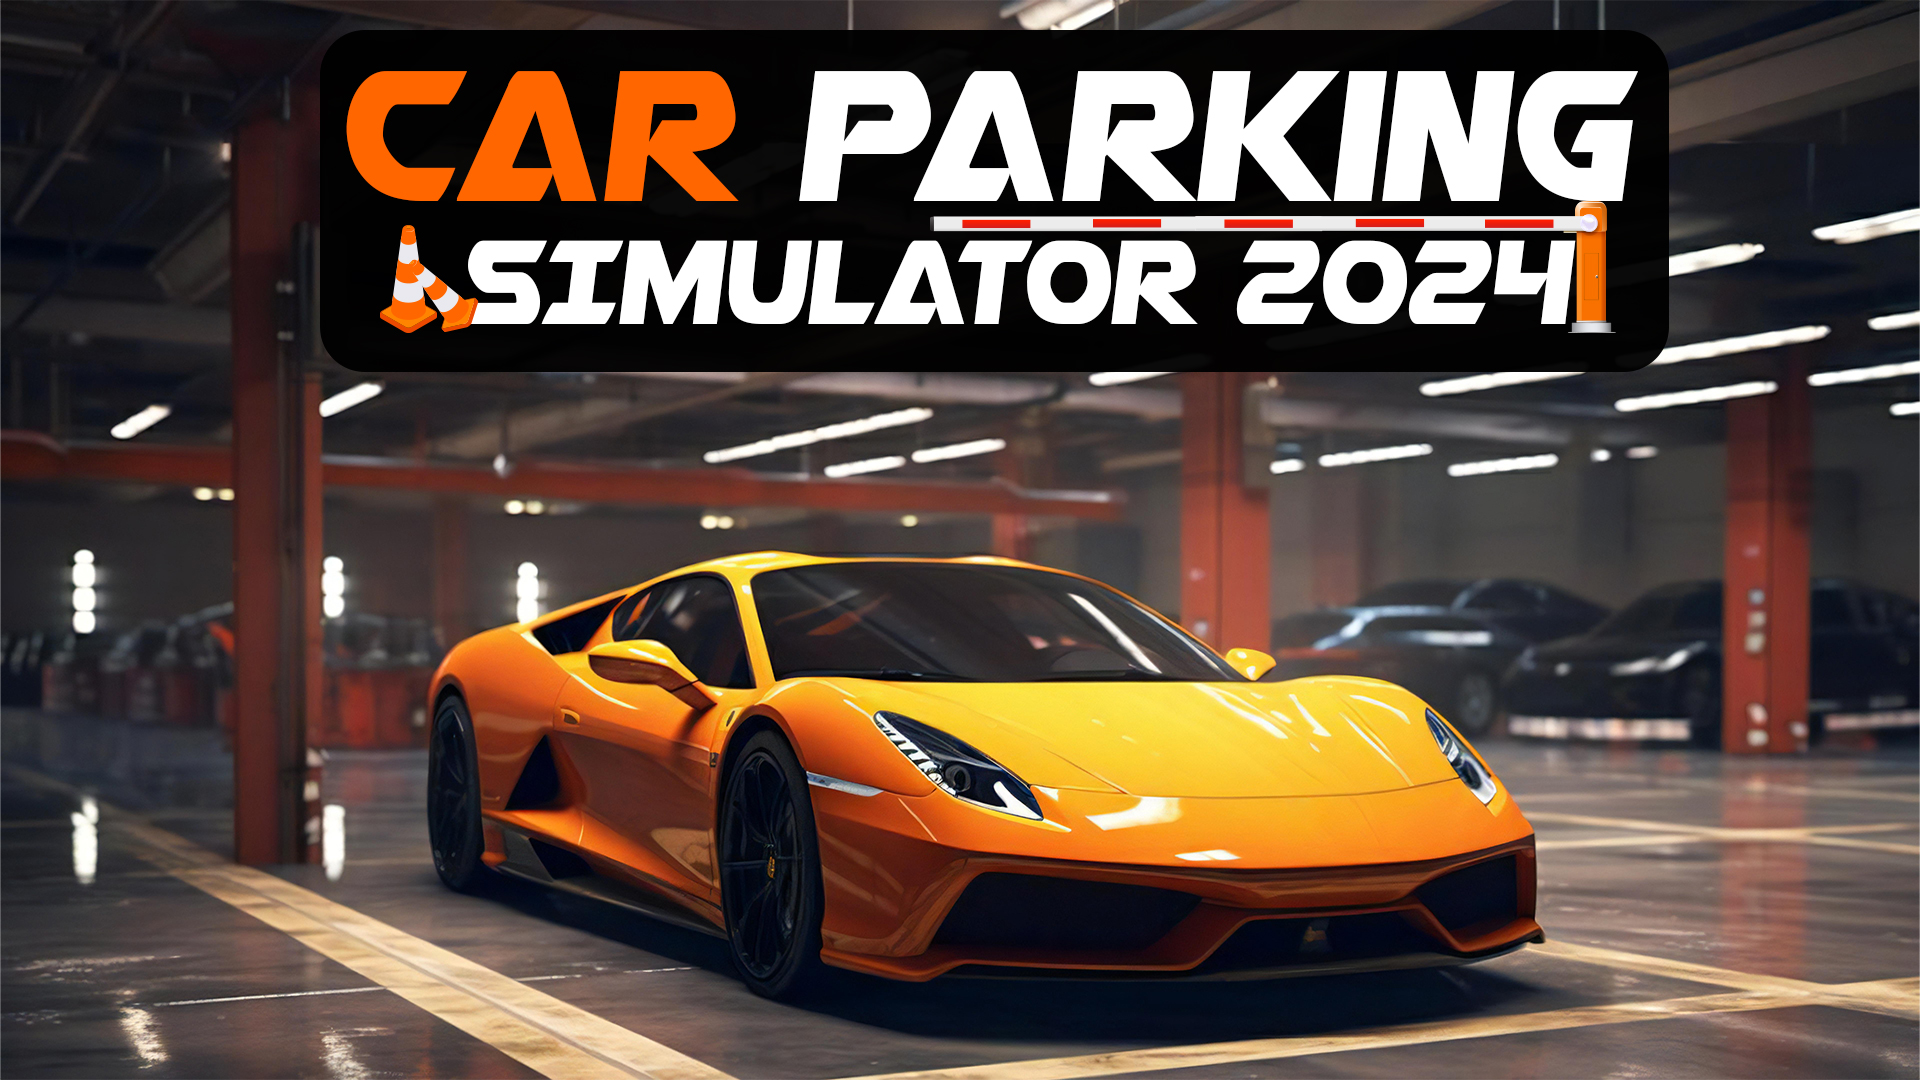 Car Parking Simulator 2024